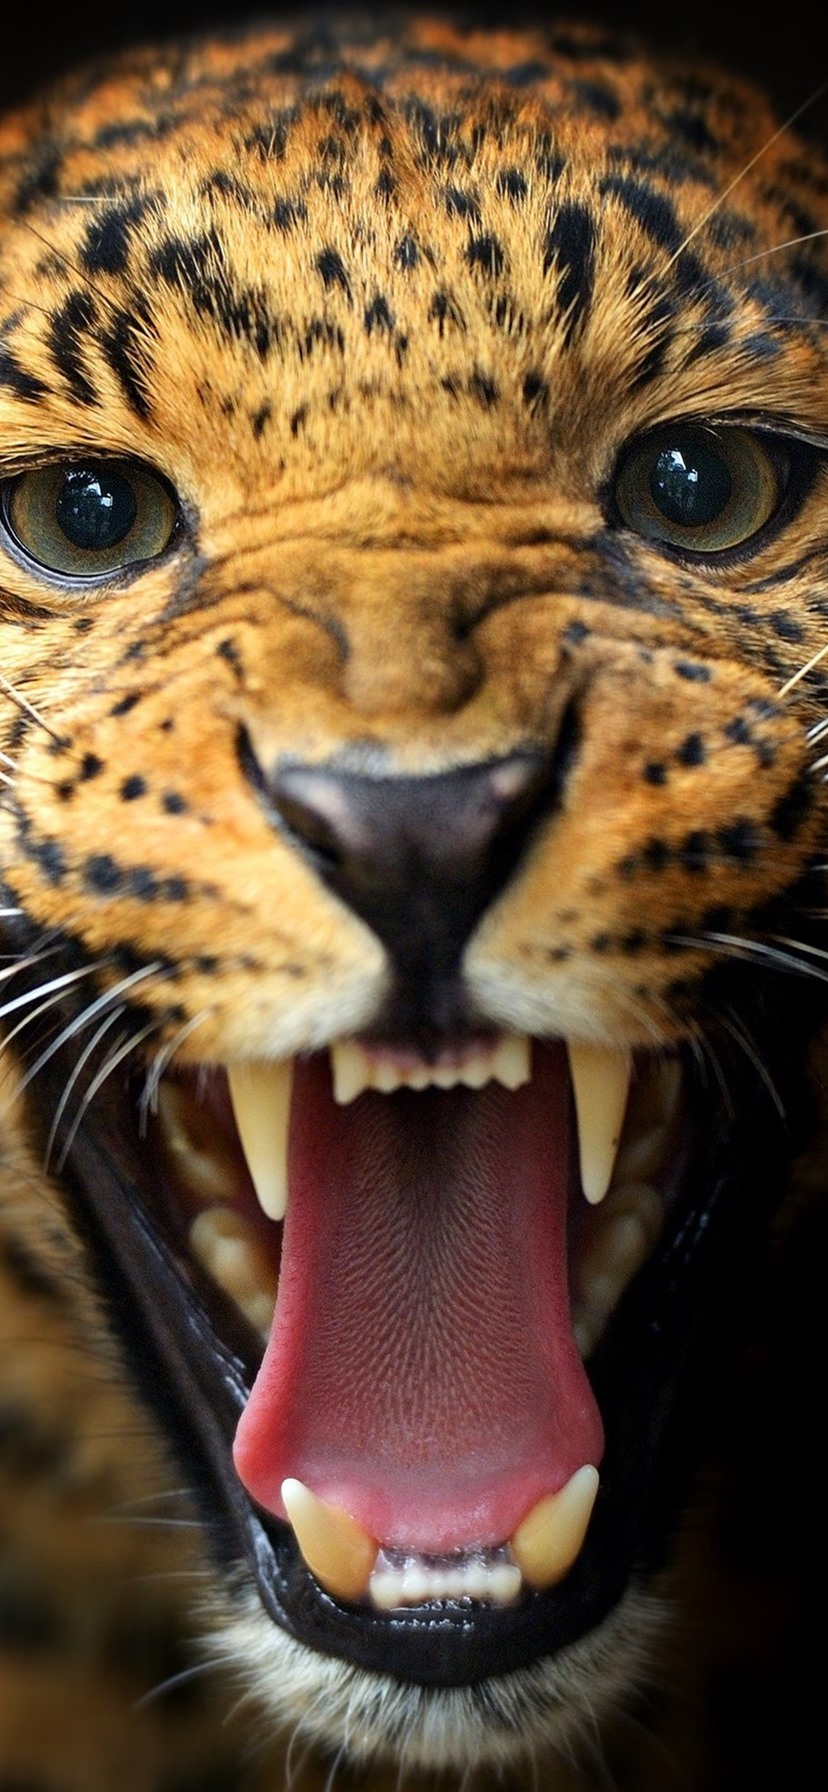 Wallpaper Animal Close Up Leopard Teeth Eyes Mustache Black